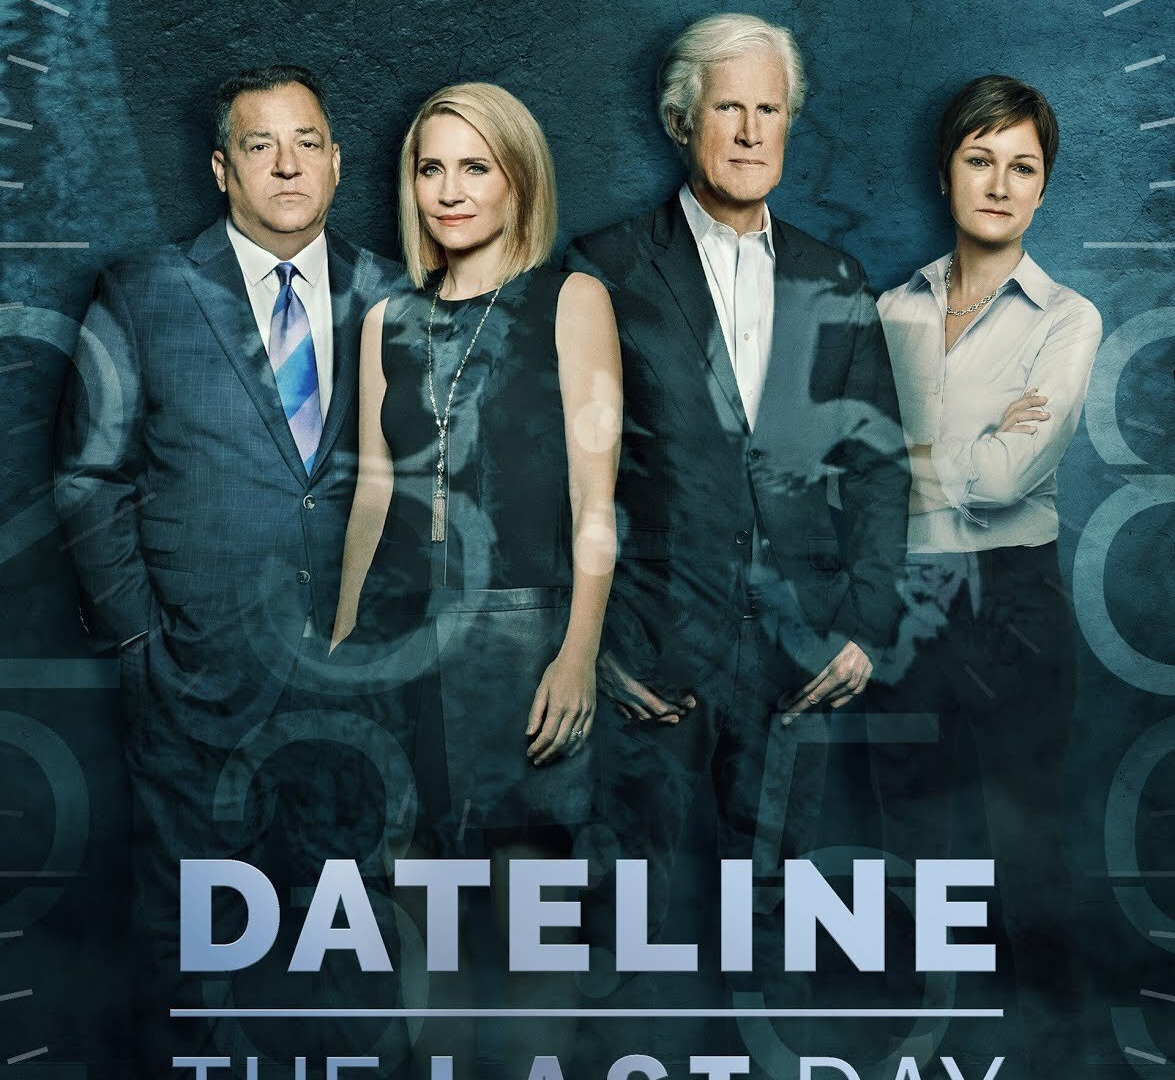 Show Dateline: The Last Day